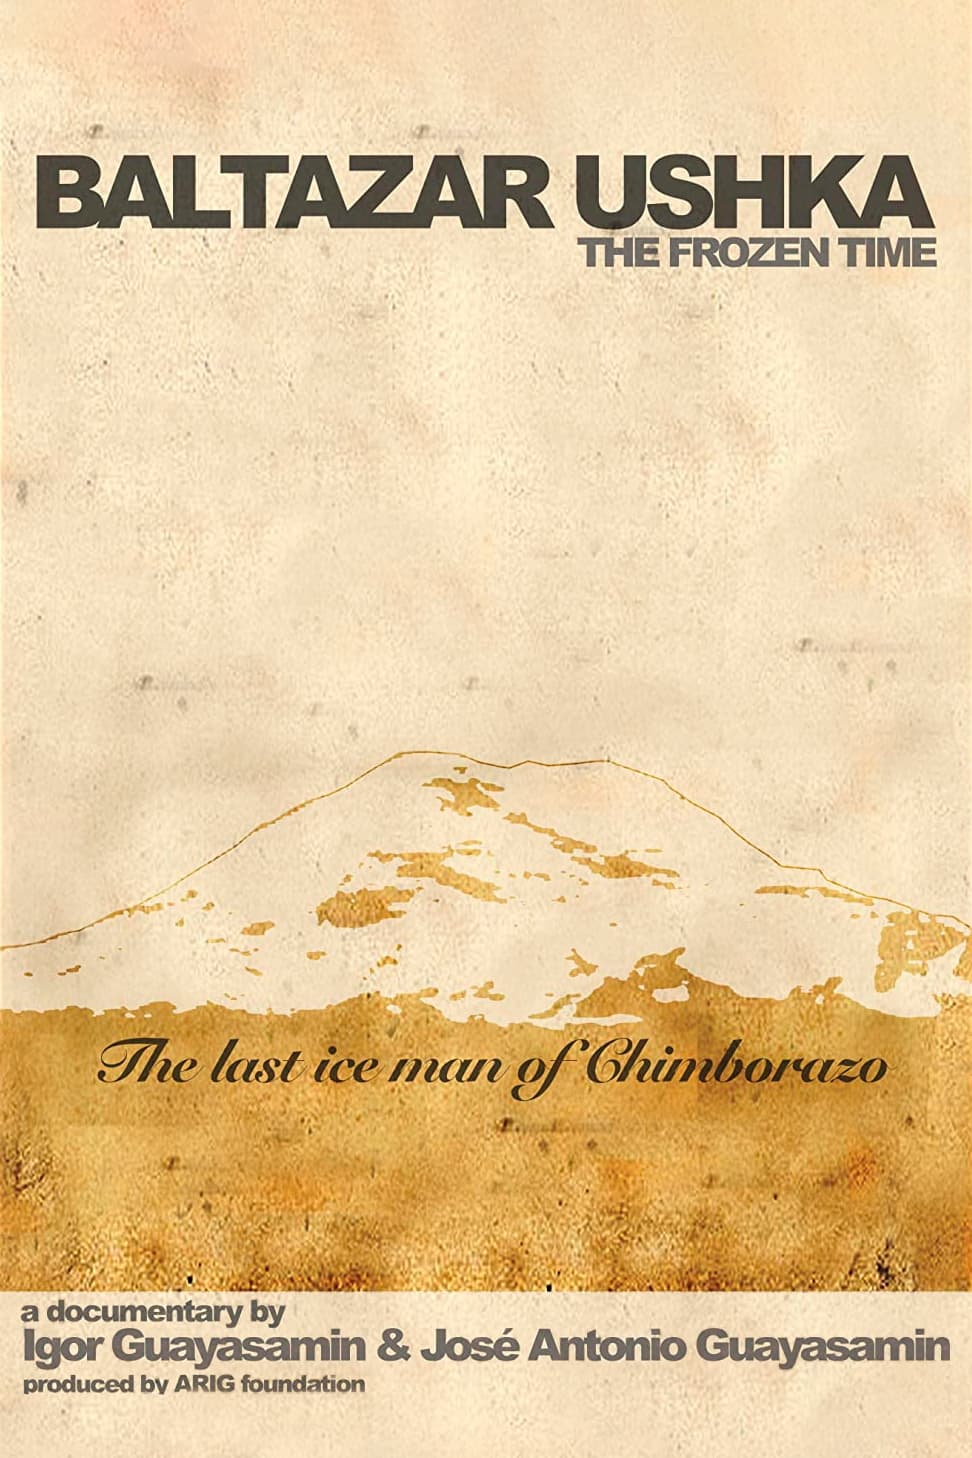 Baltazar Ushka, The Frozen Time